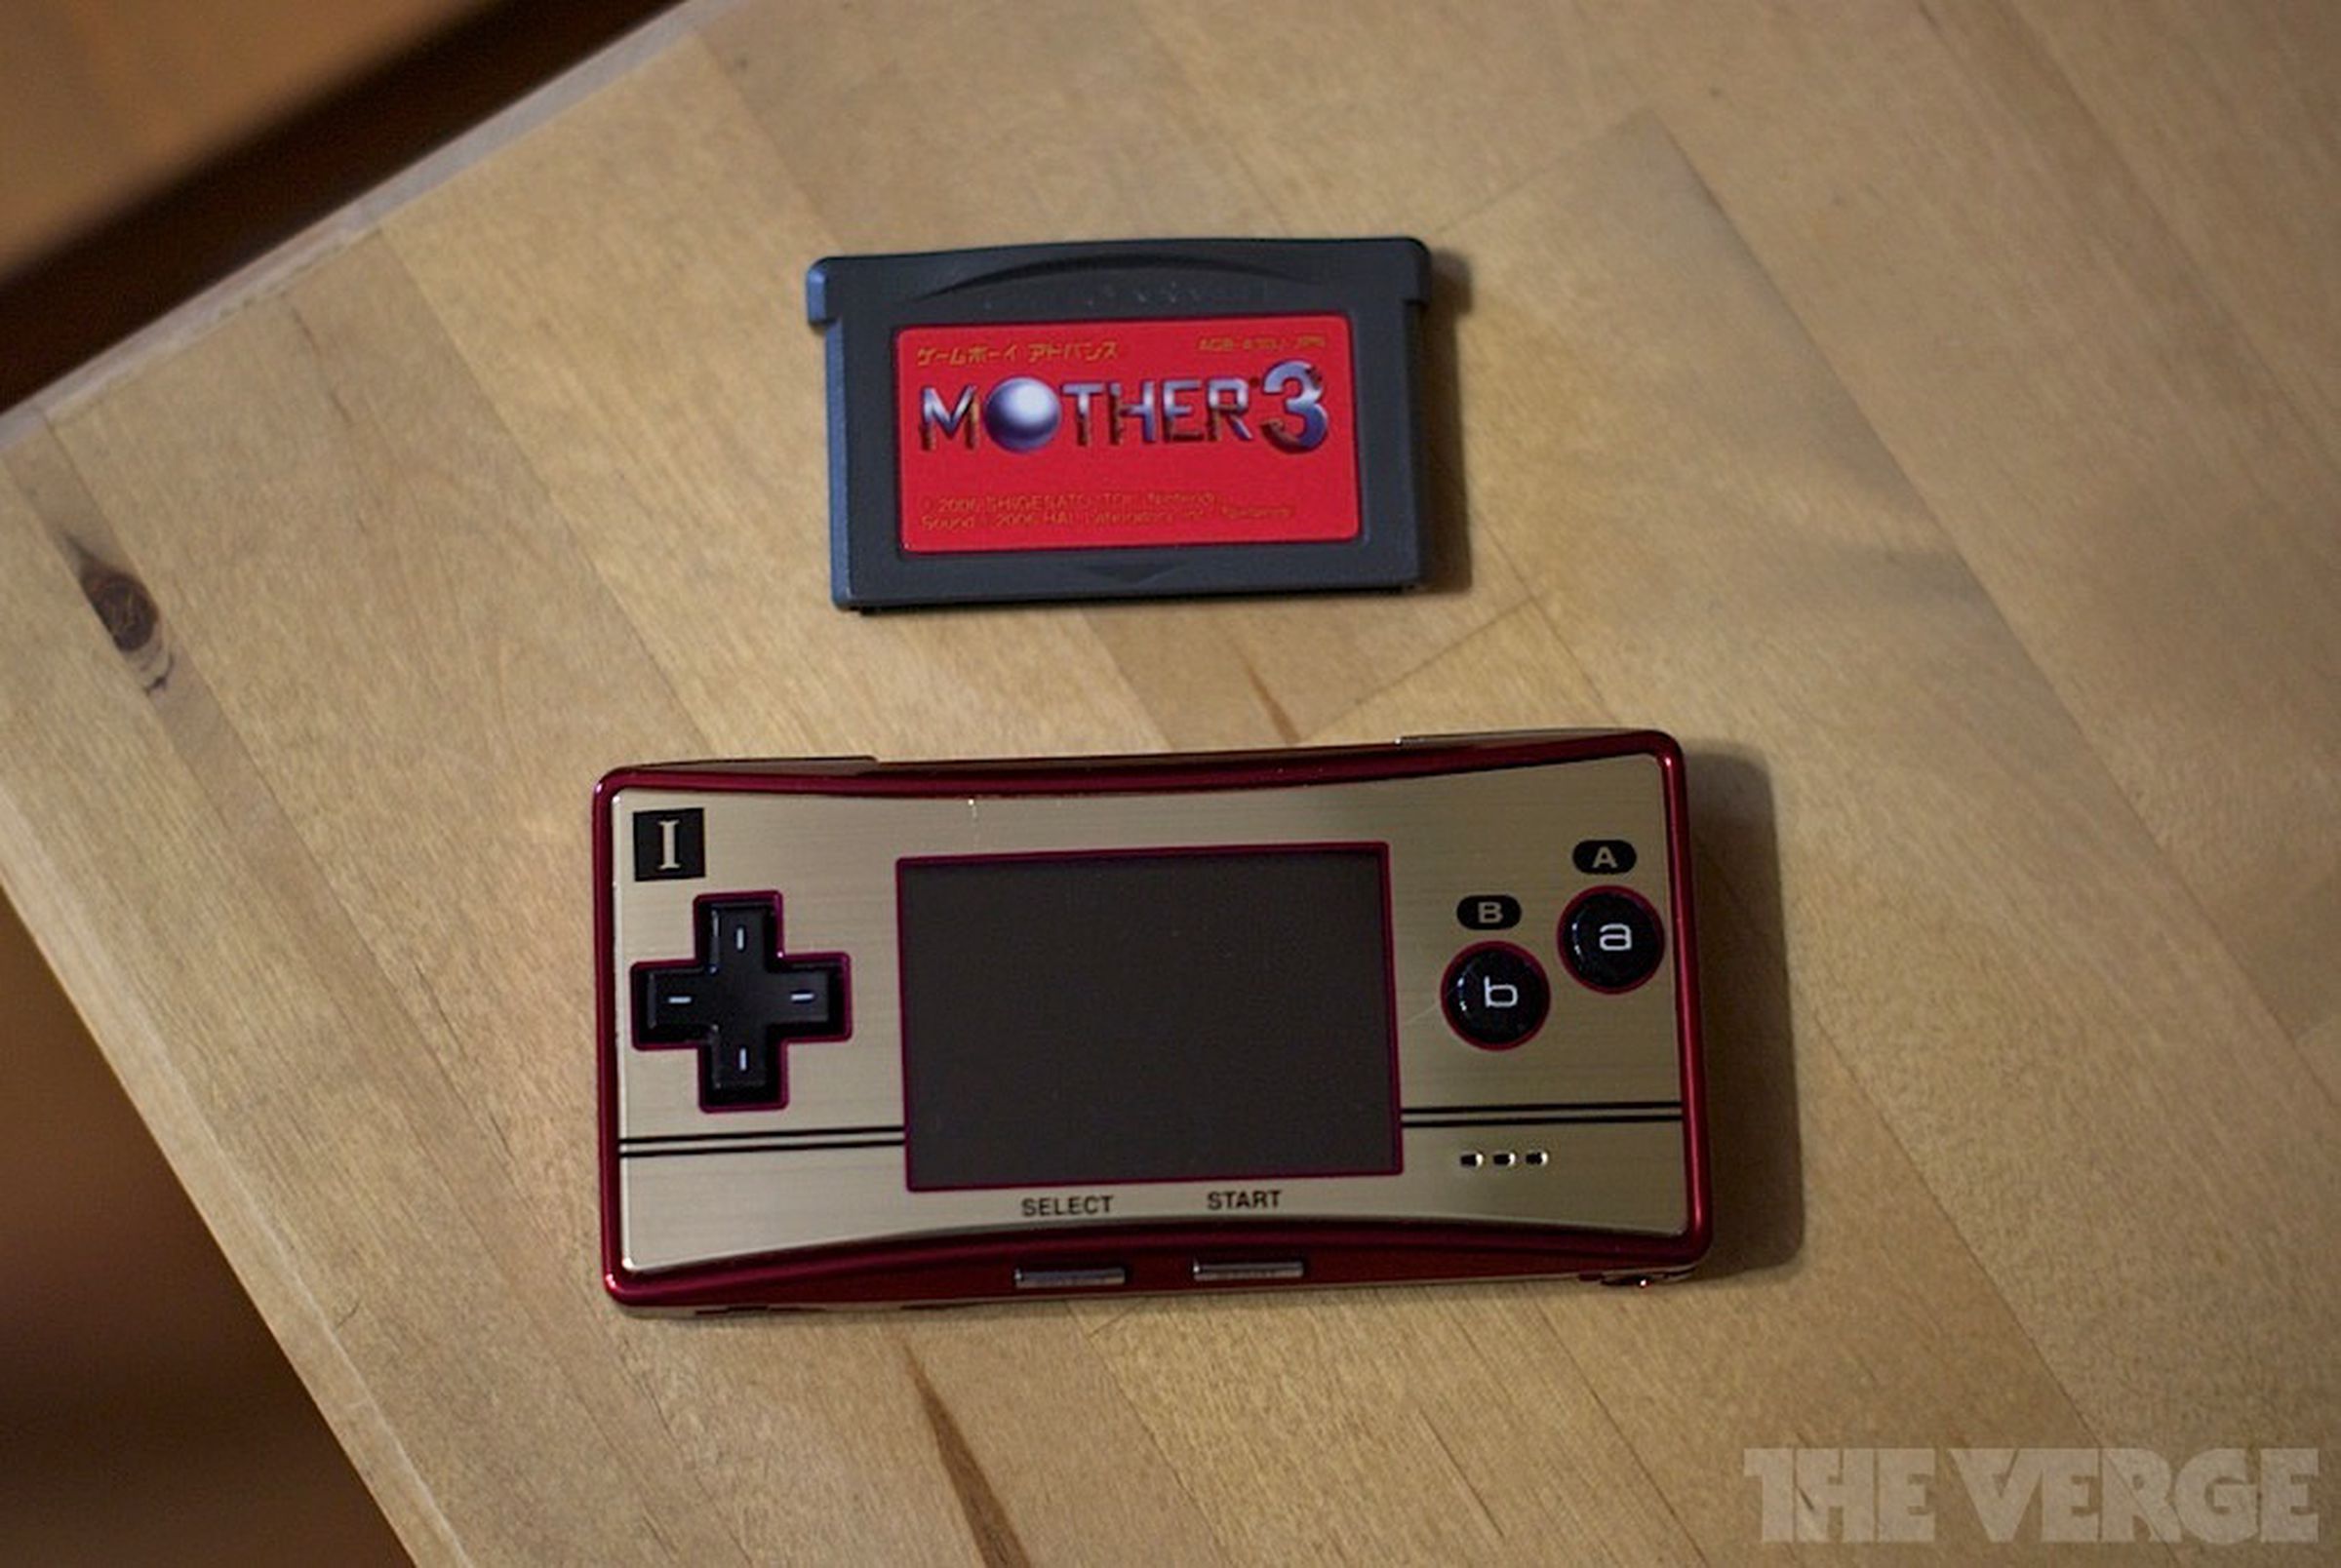 Game Boy Micro hands-on photos